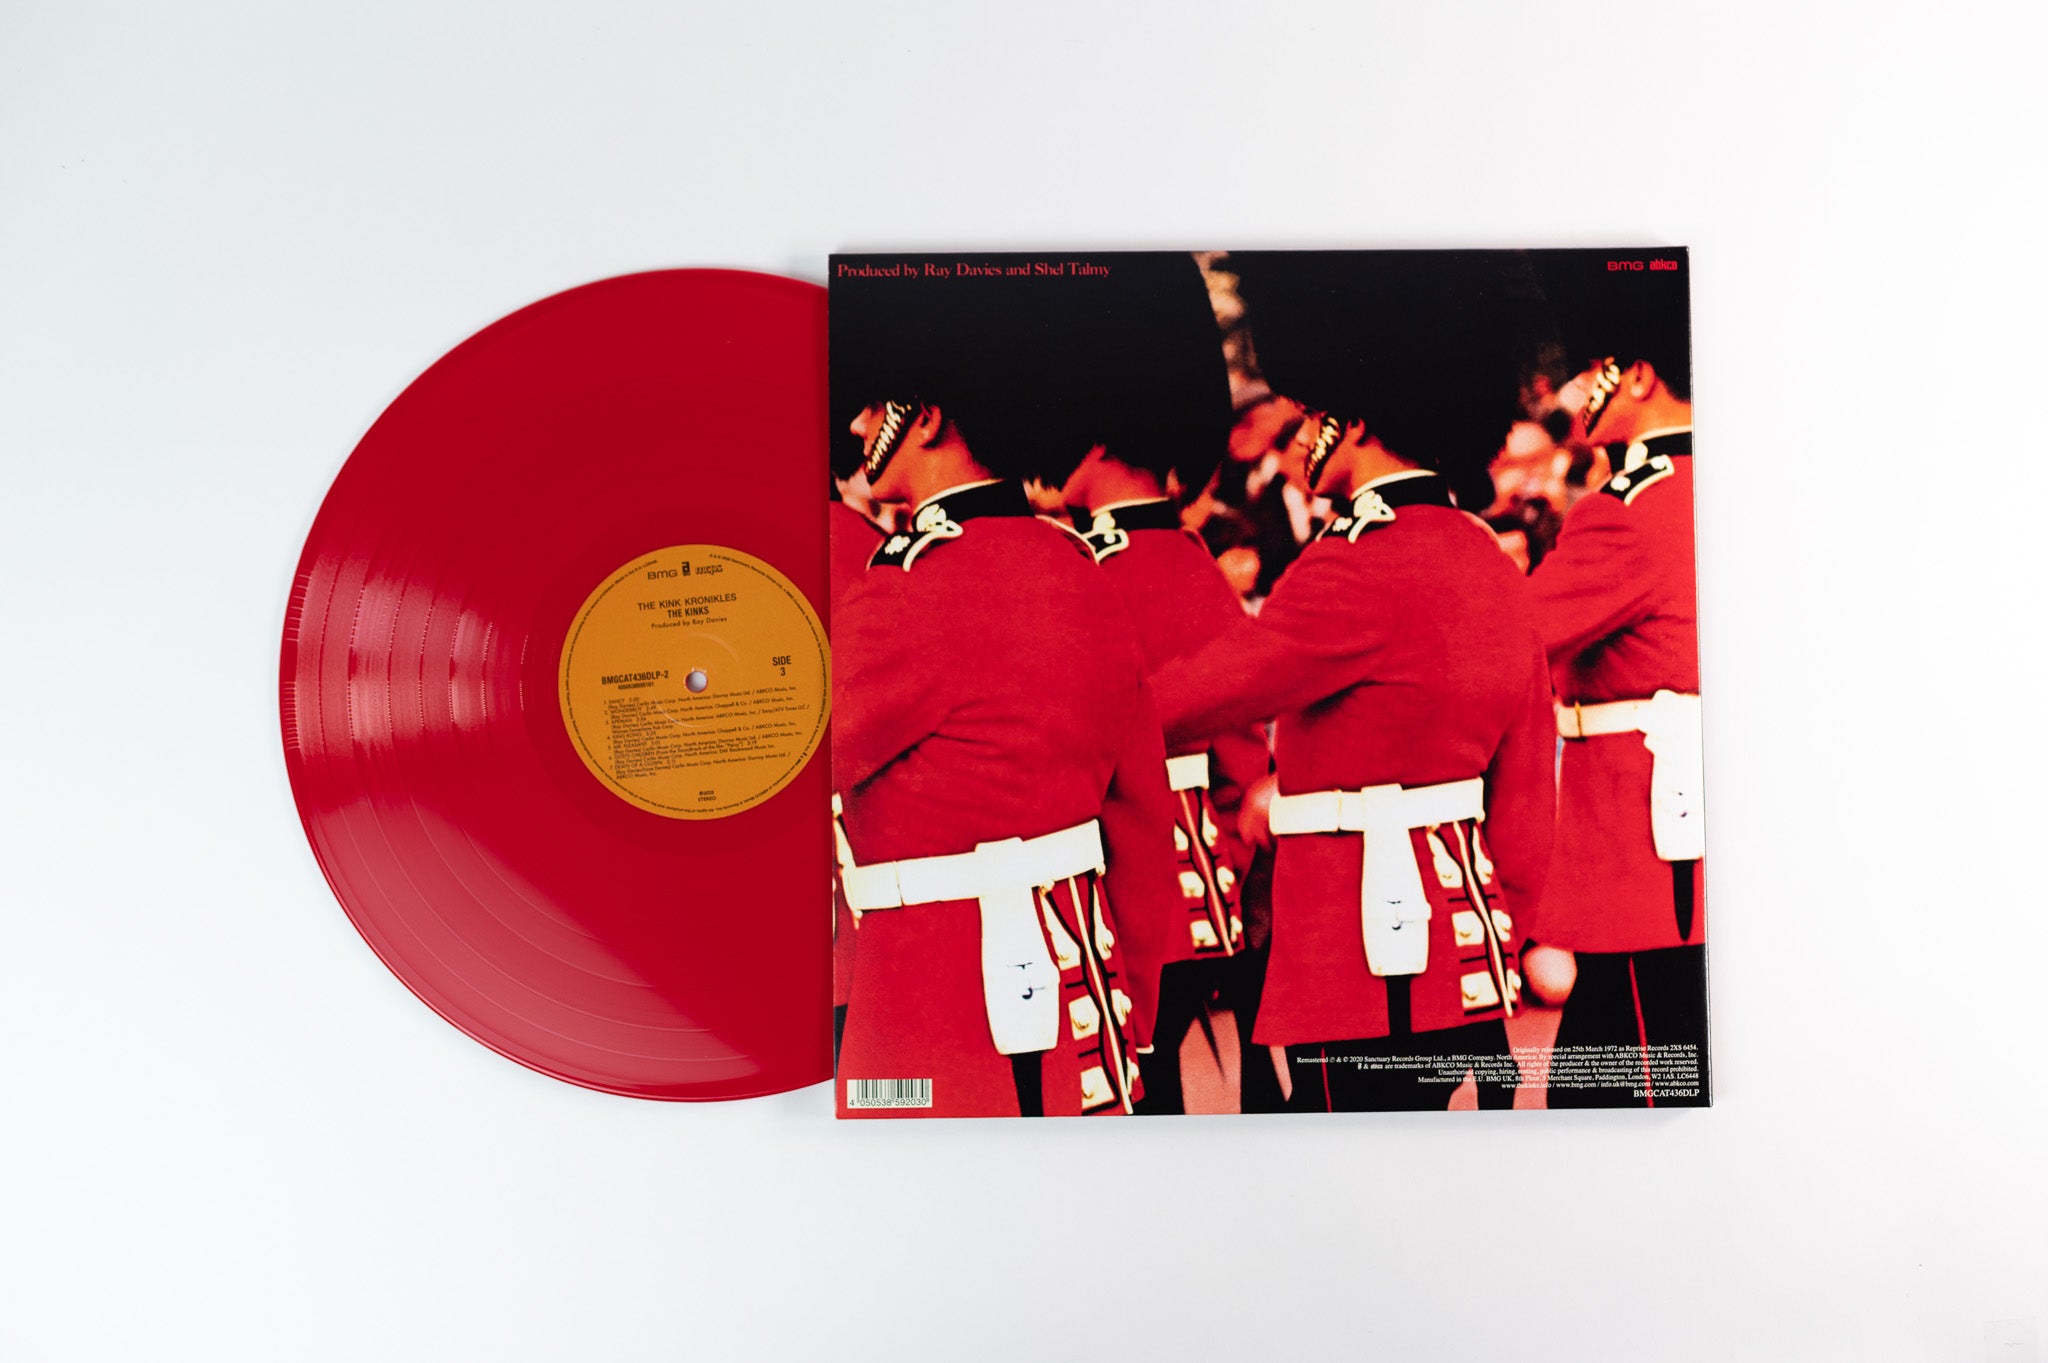 The Kinks - The Kink Kronikles on BMG ABKCO Ltd Red Vinyl Reissue